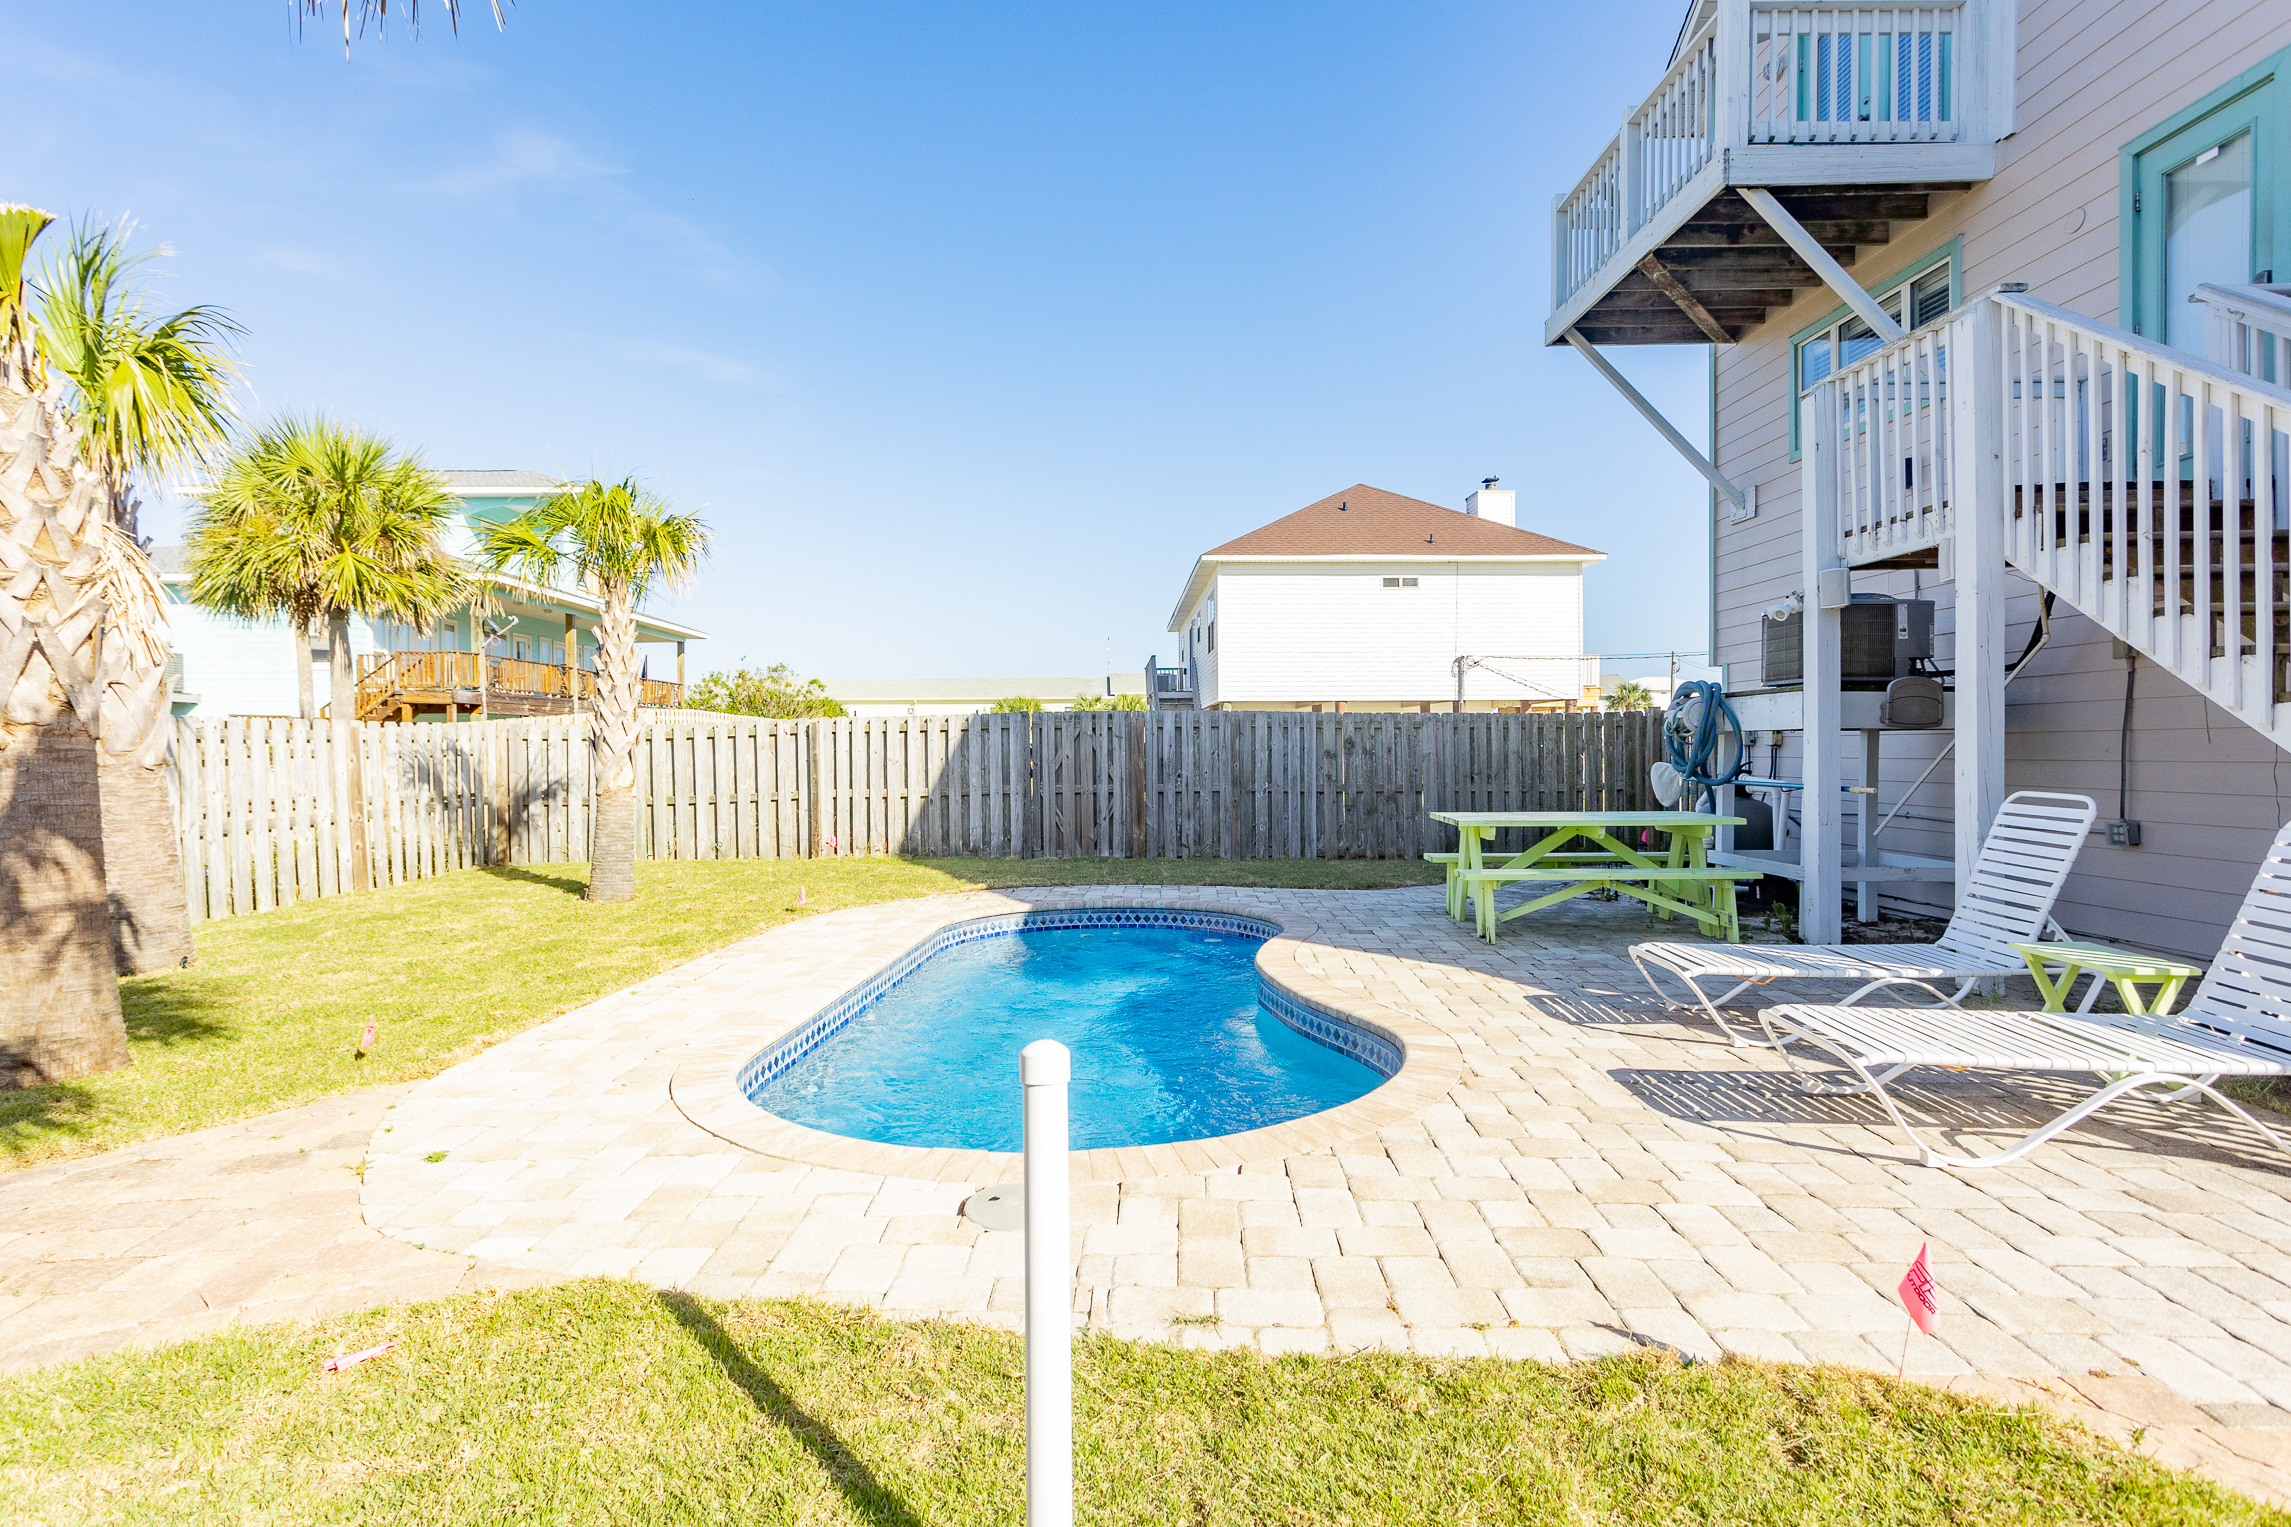 Maldonado 813 - The Lazee Lagoon Beach House House / Cottage rental in Pensacola Beach House Rentals in Pensacola Beach Florida - #12